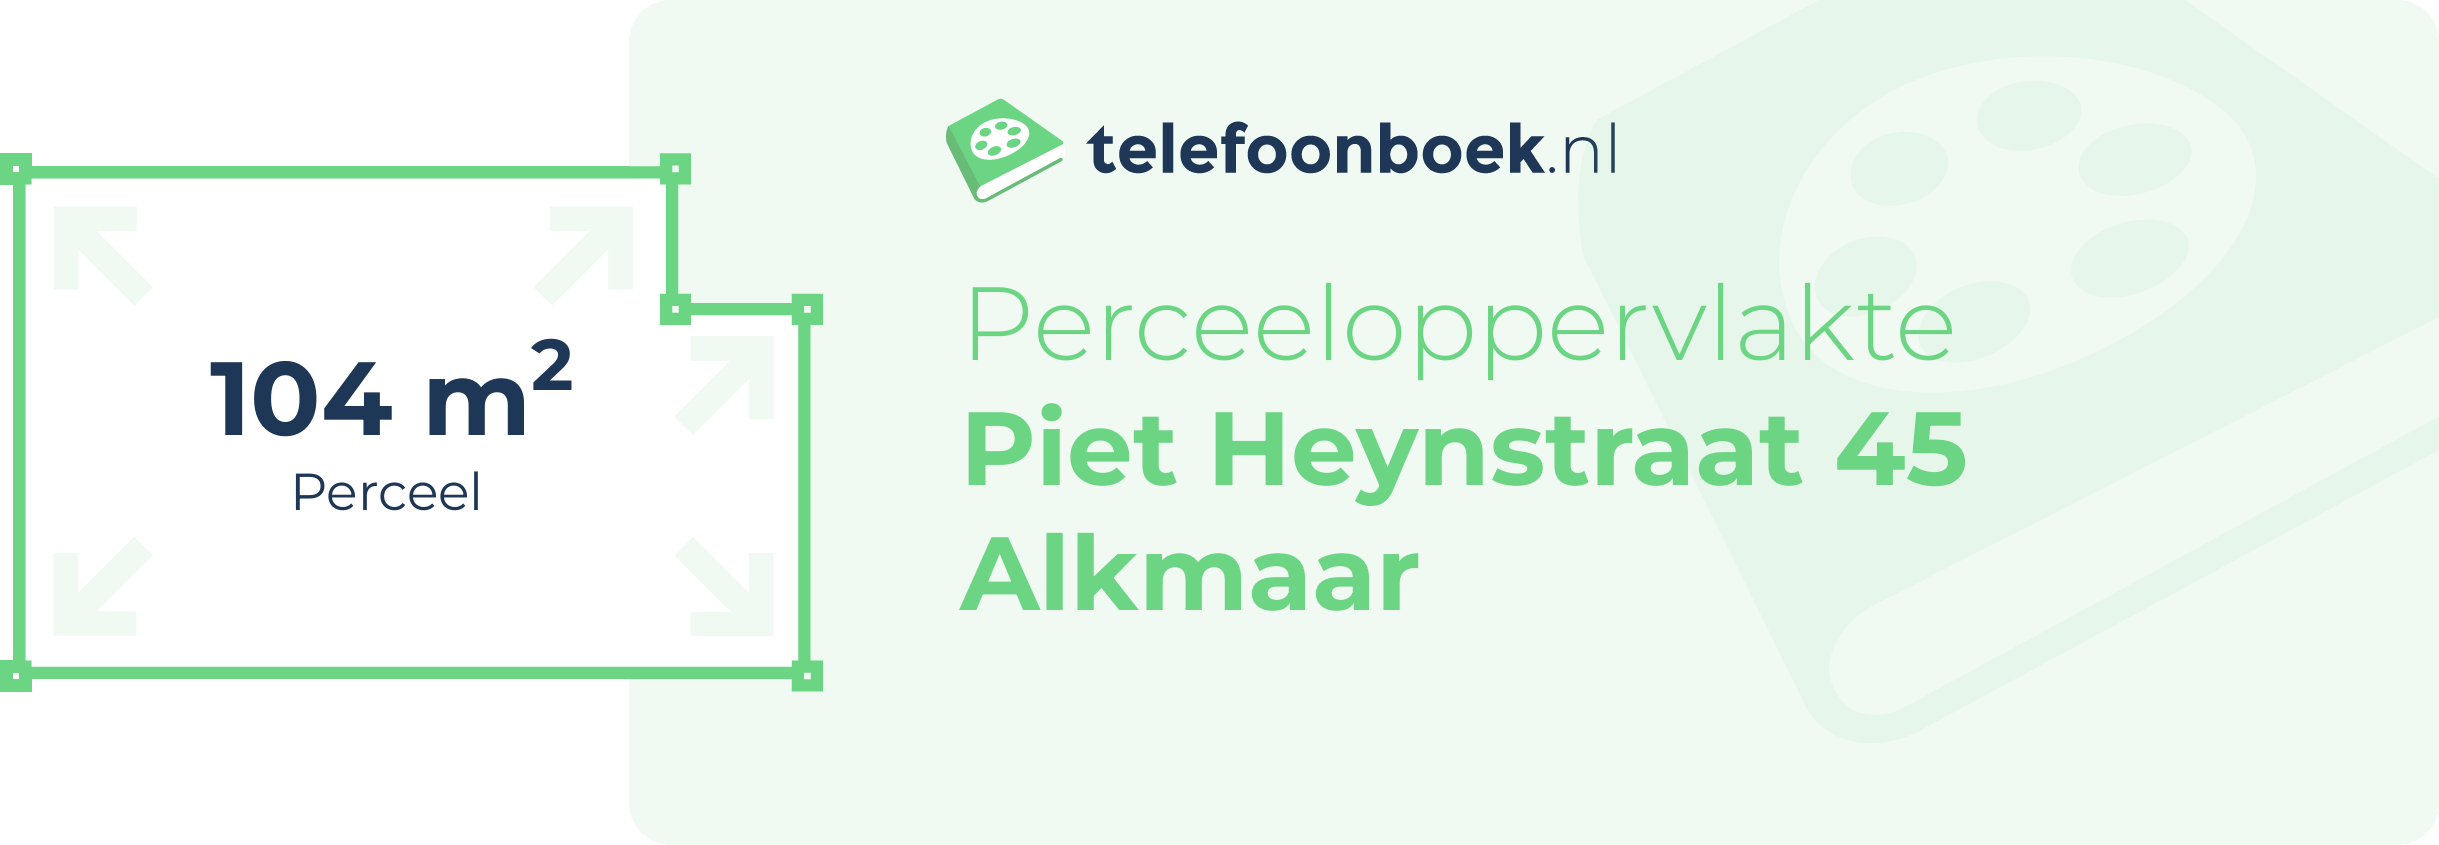 Perceeloppervlakte Piet Heynstraat 45 Alkmaar